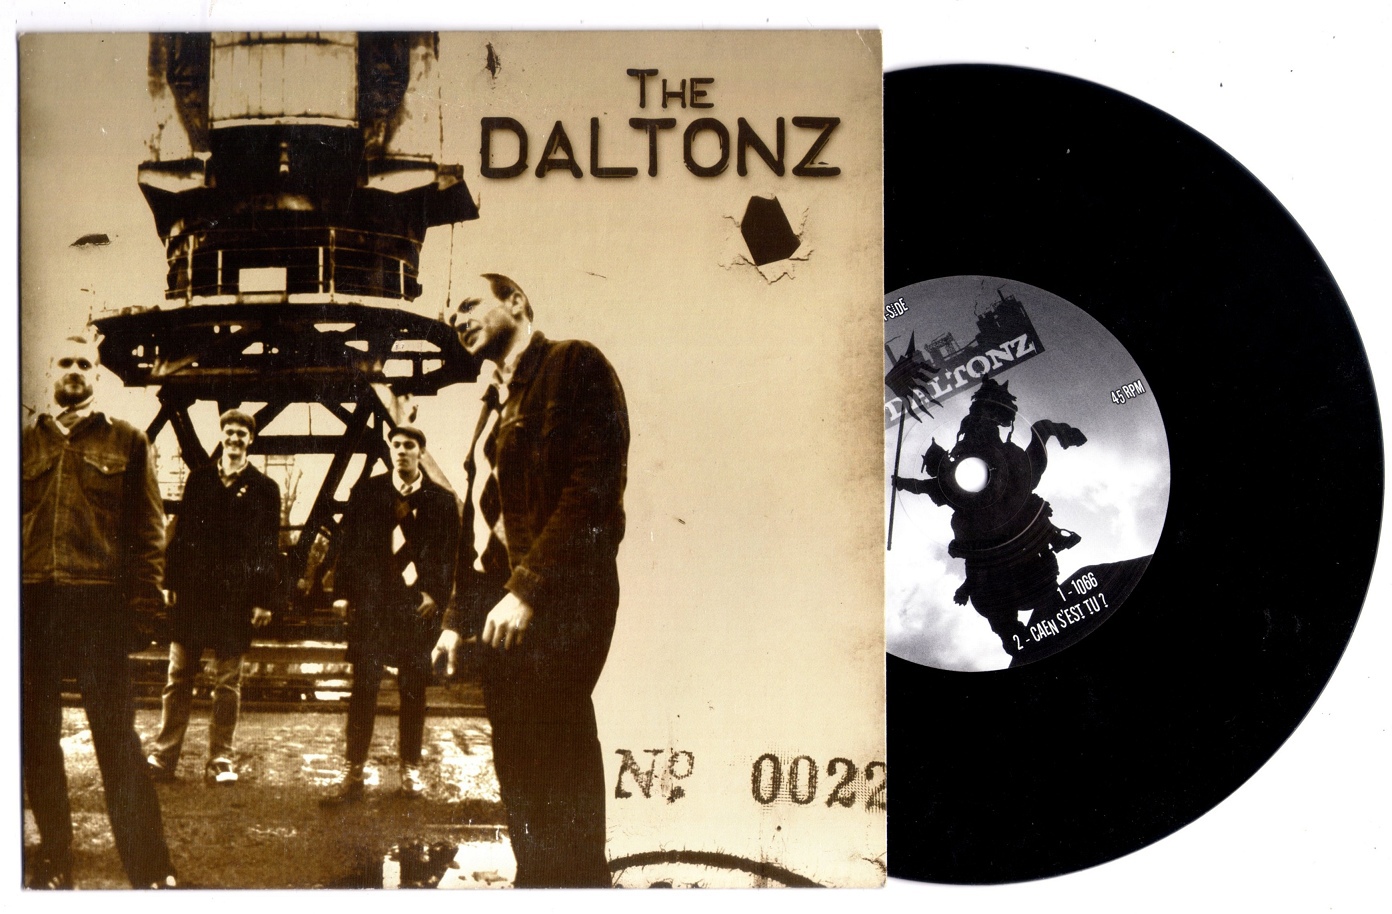 Daltonz (The) EP 7